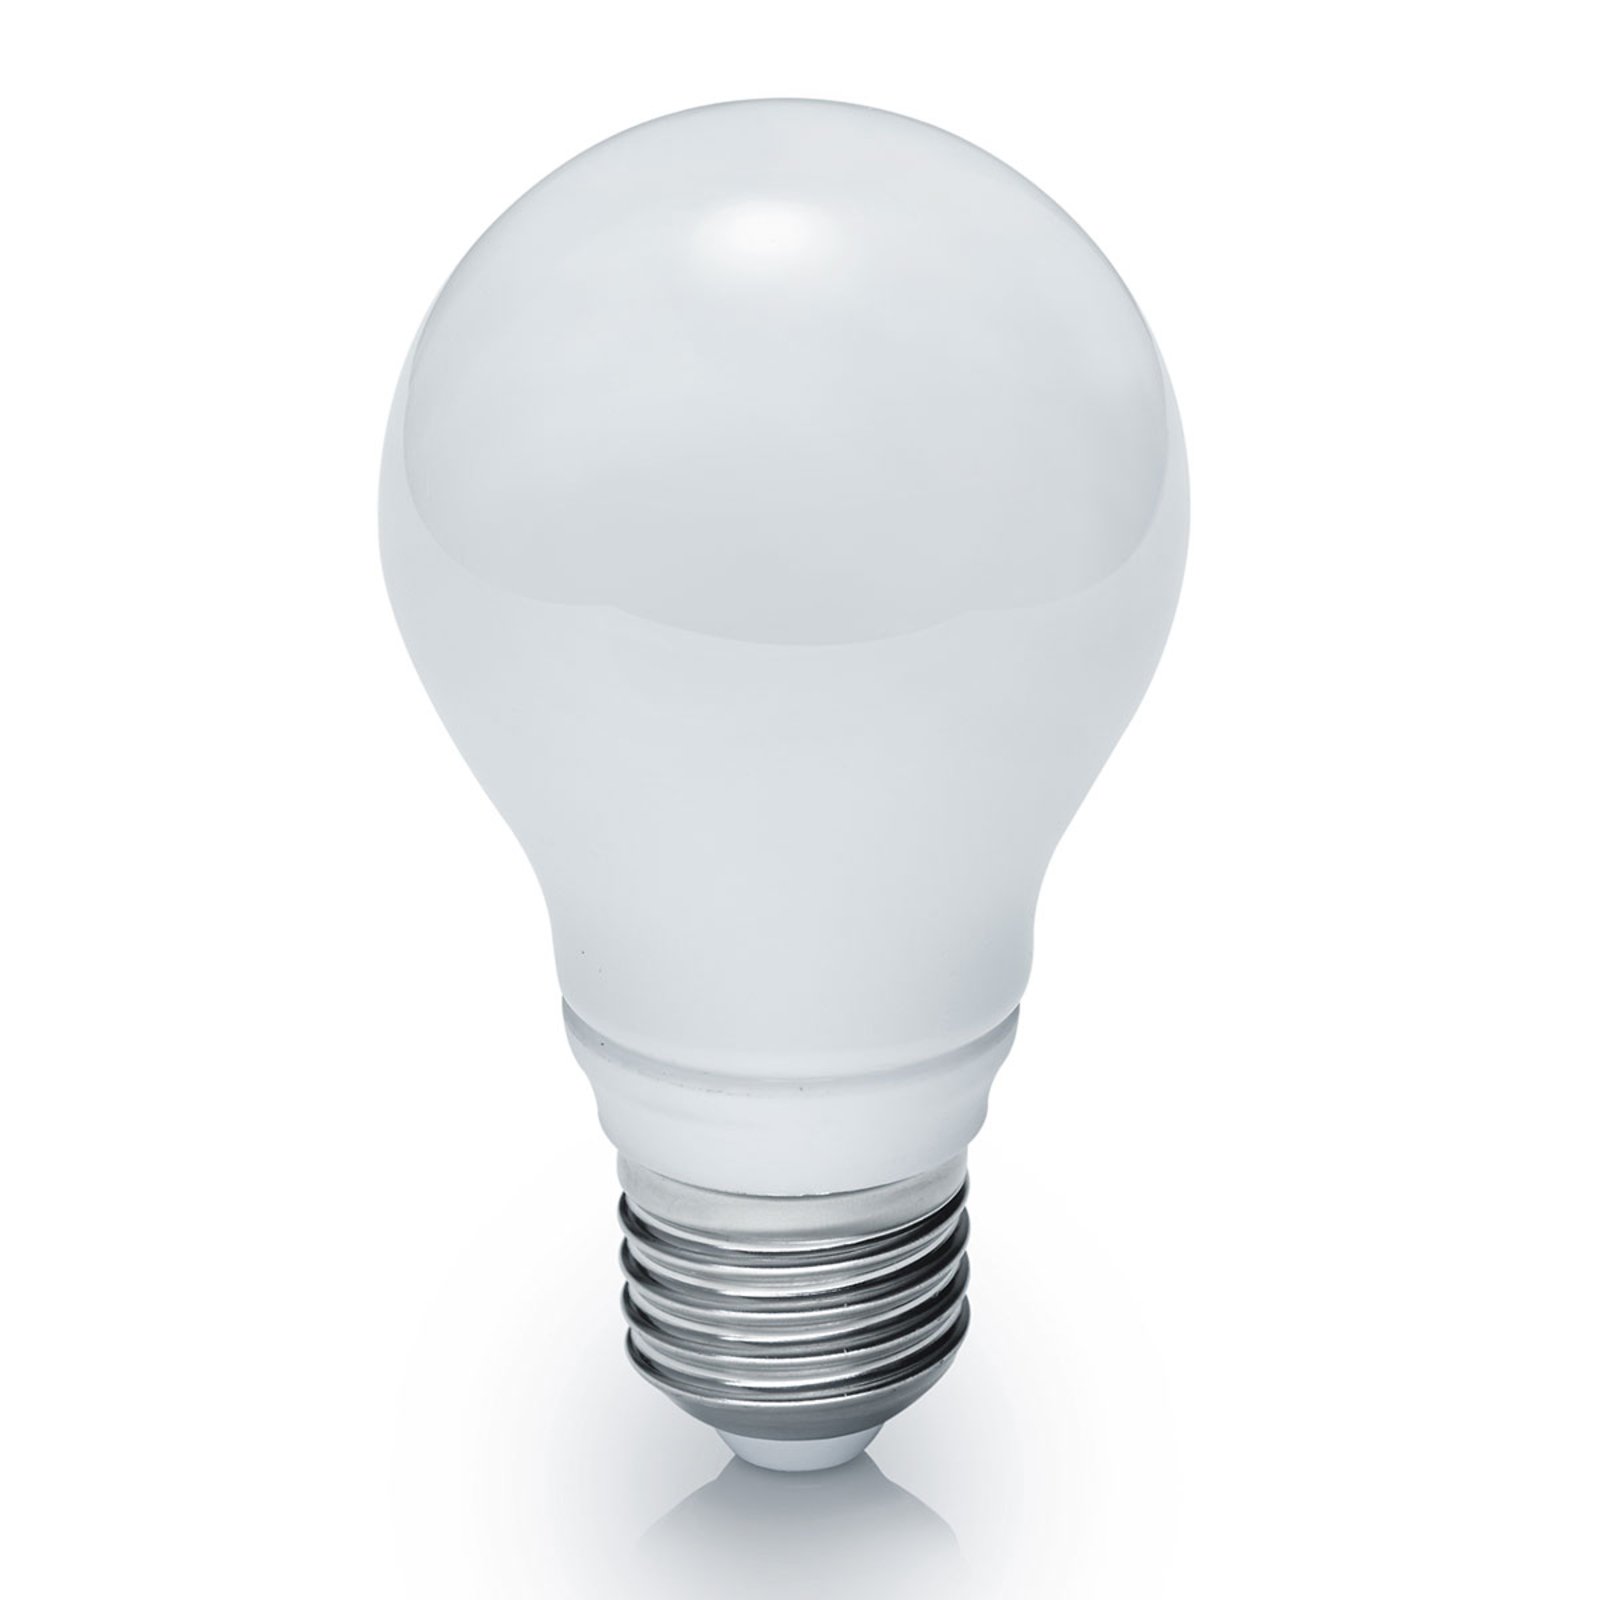 burgemeester vlam Woord LED lamp E27 10W dimbaar, lichttemperatuur warmwit | Lampen24.be